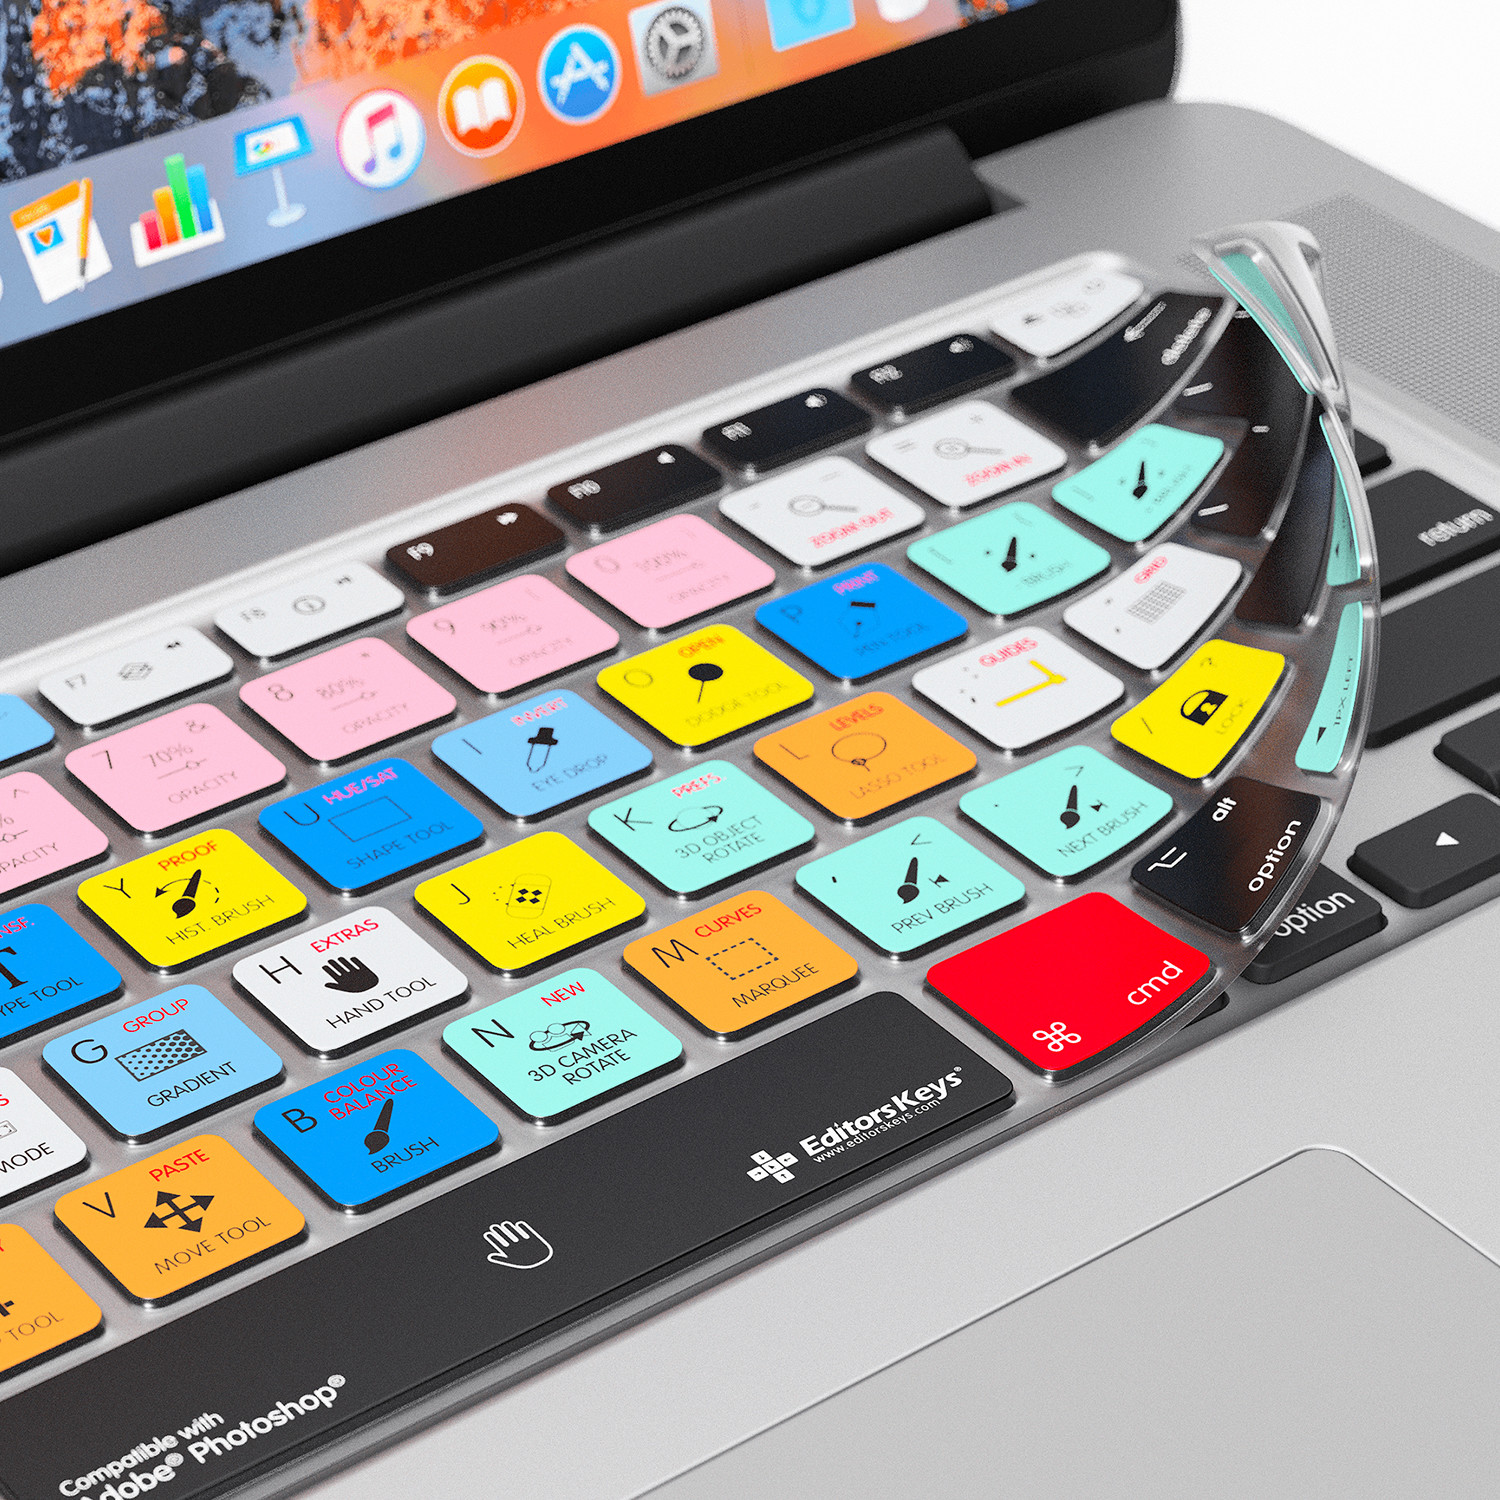 MacBook Pro Retina with Editors Keys Adobe Photoshop